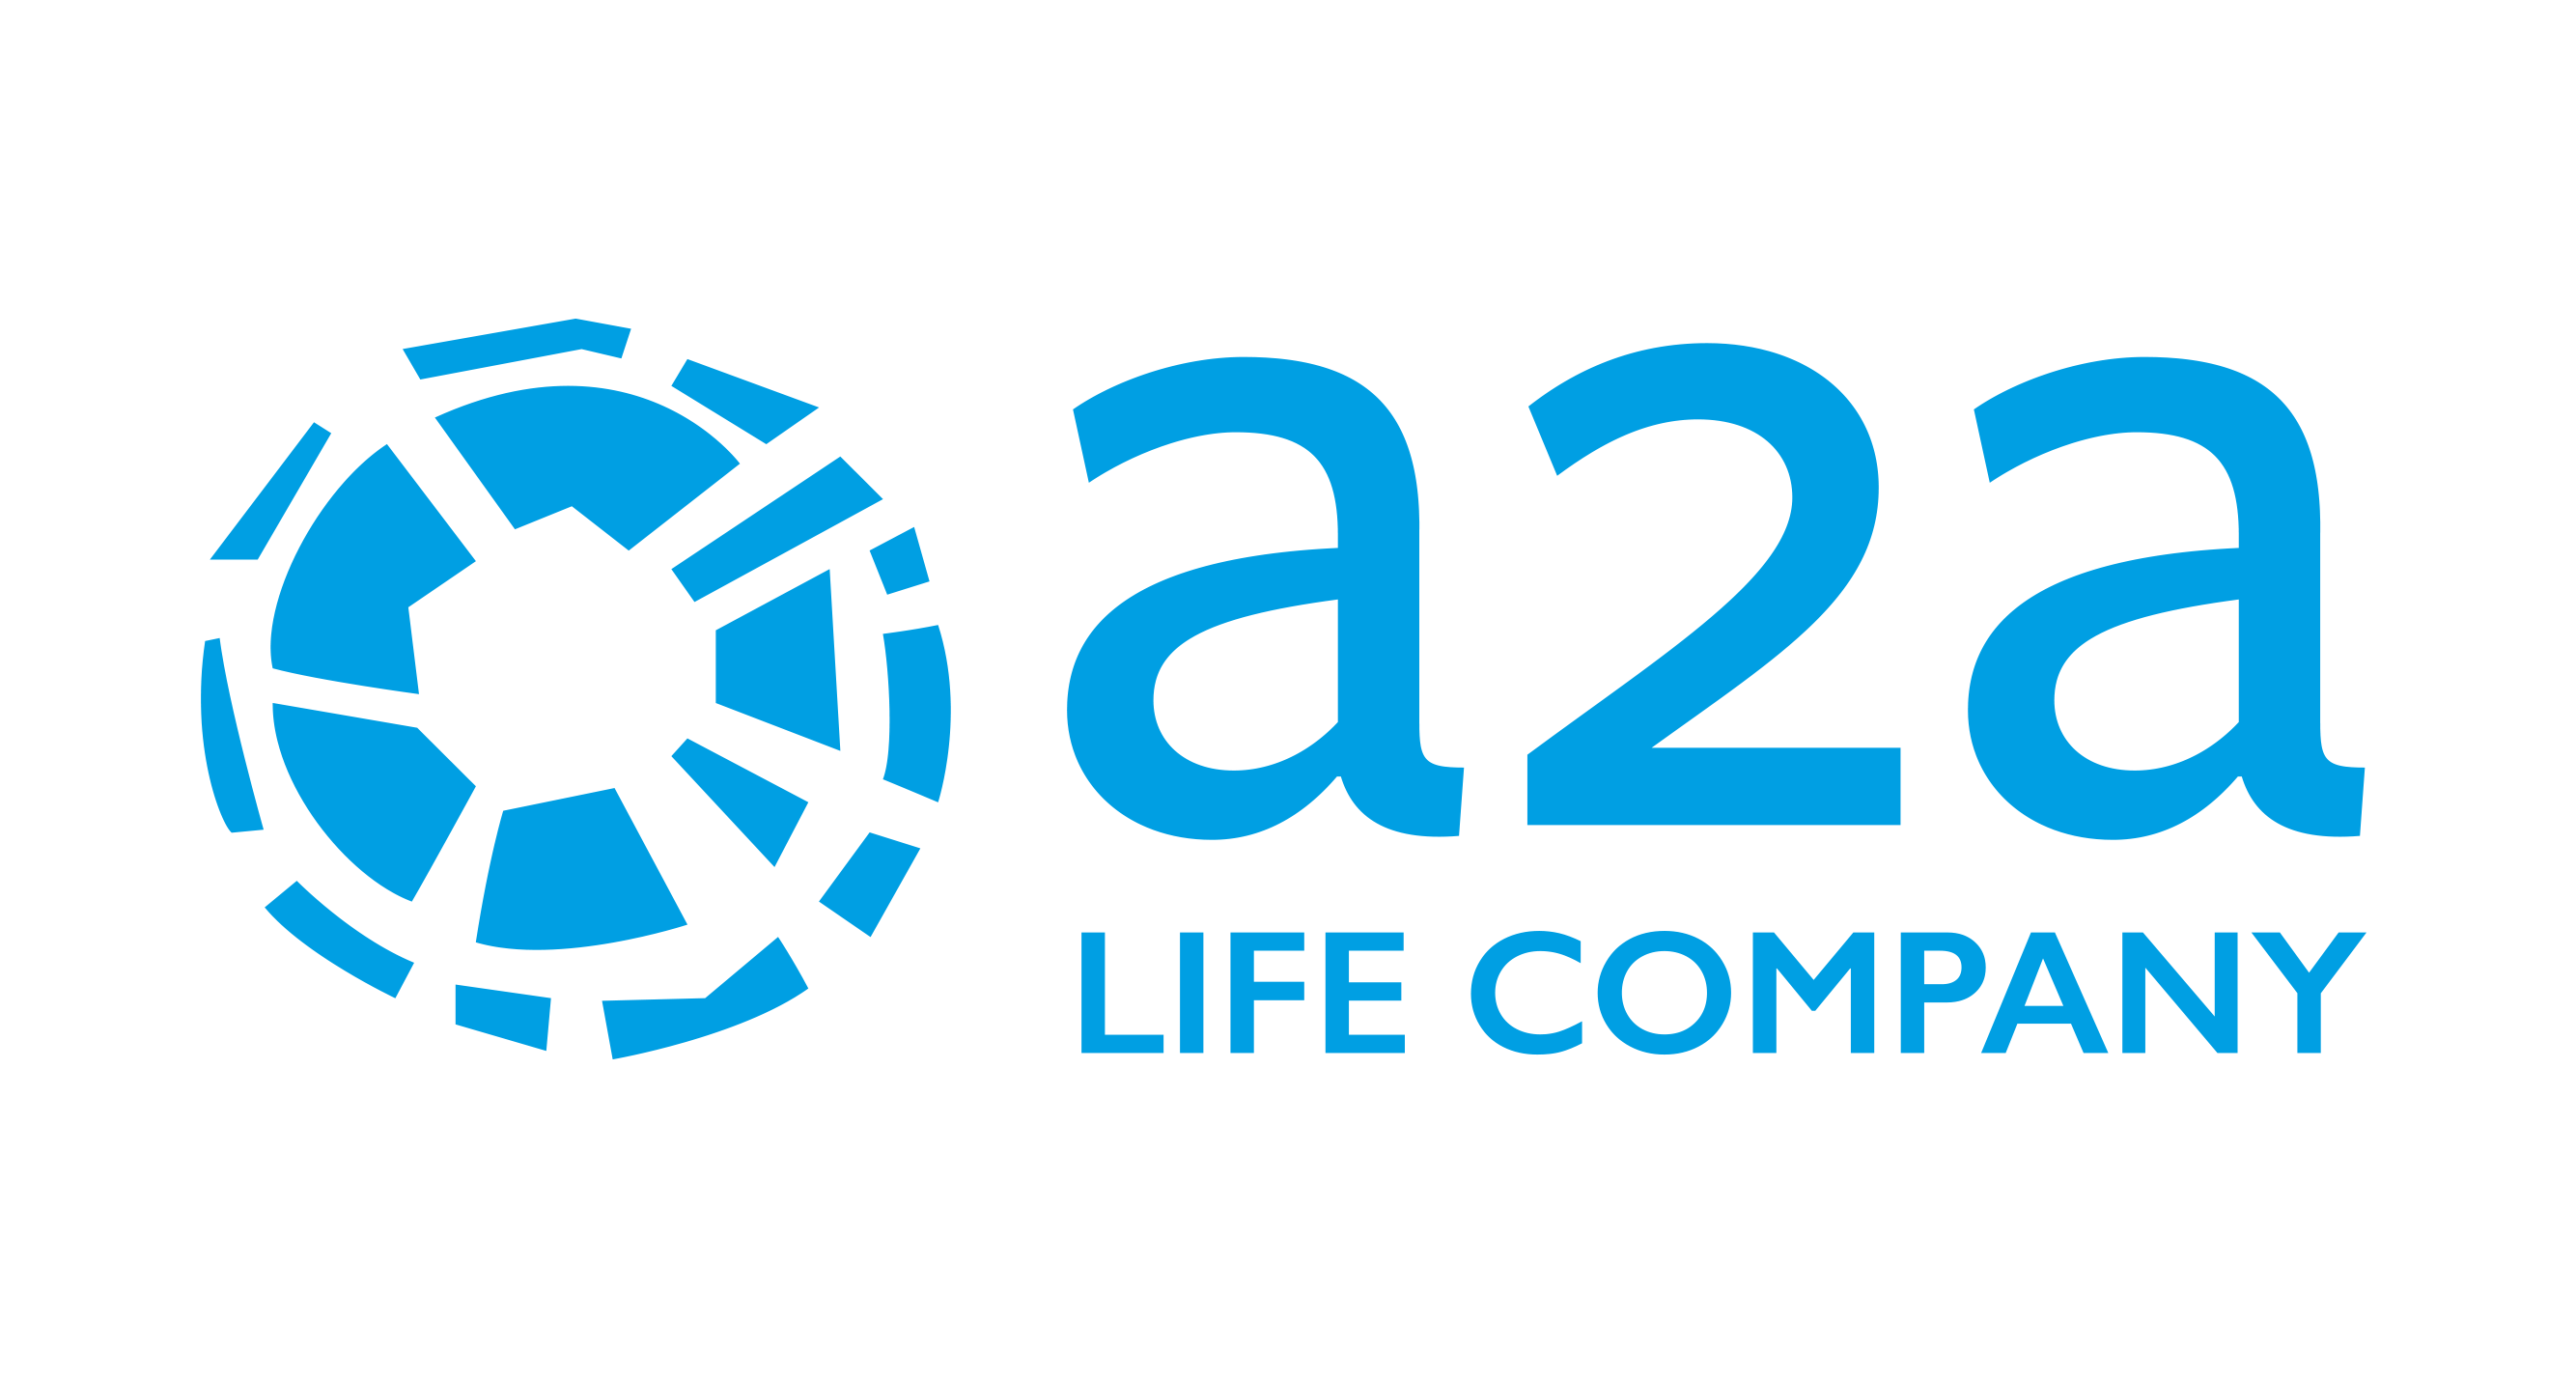 A2A_logo_vett_payoff_2021_POS_BIG